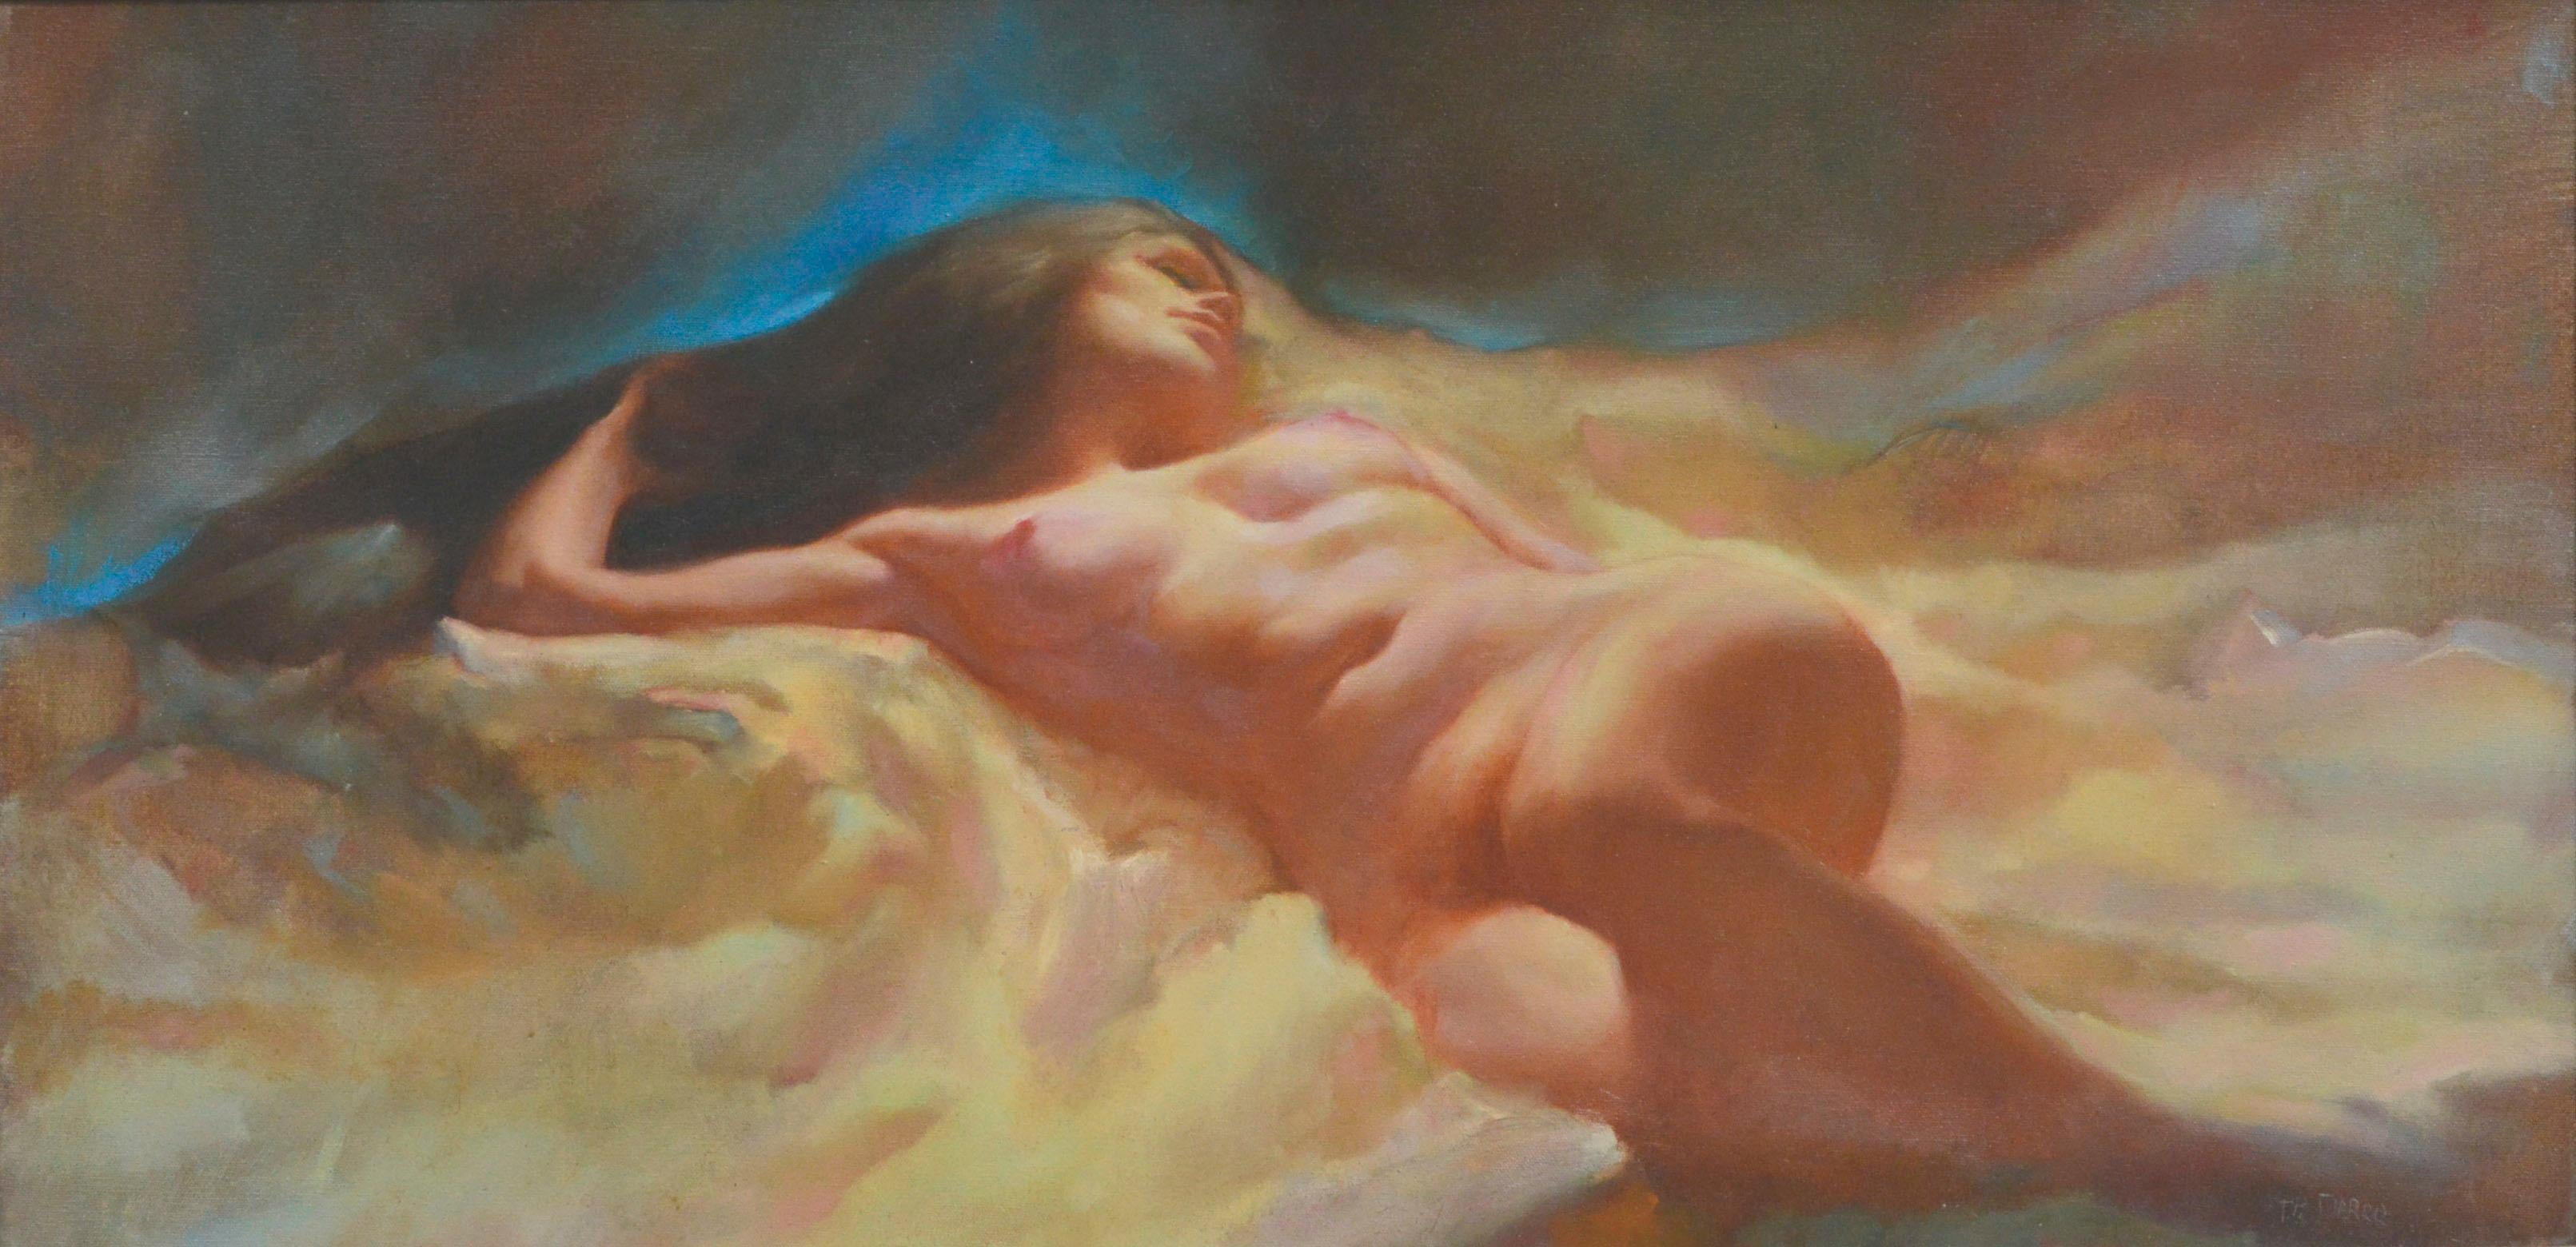 Liegendes Twilight-Nacktes Figuratives  – Painting von Thomas P. Darro